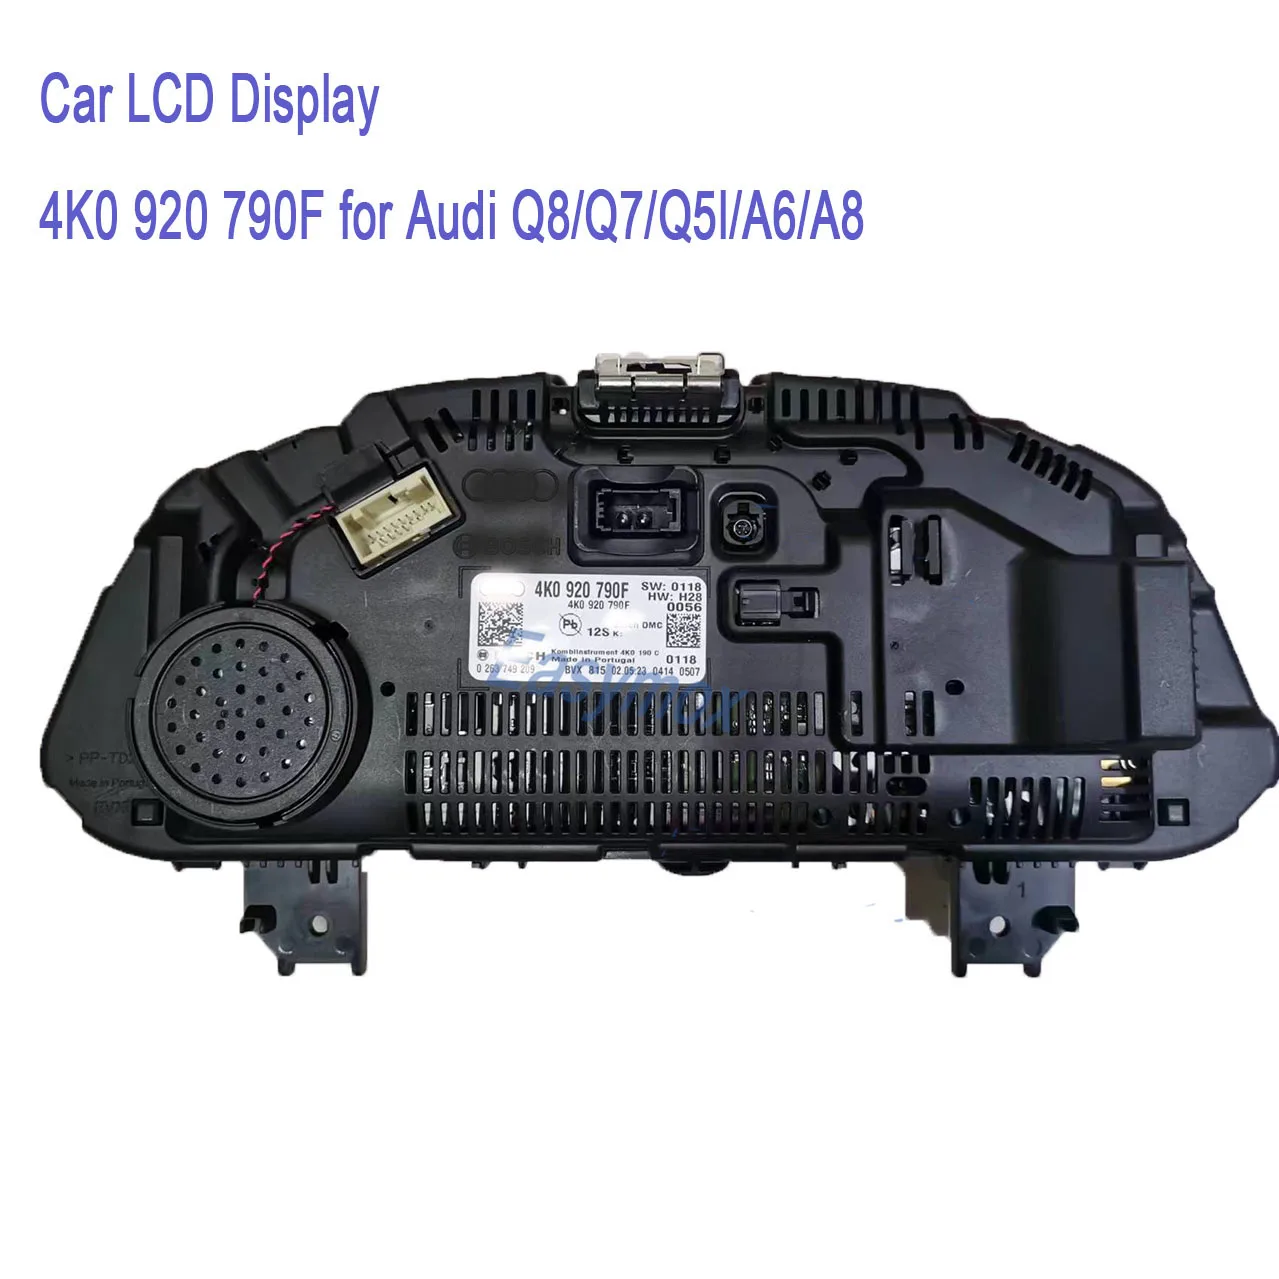 

4K0 920 790F Original12.3inch LCD Display Virtual Cockpit for Audi Q8/Q7/Q5l/A6/A8 /S6/RS6 Dashboard Instrument Cluster